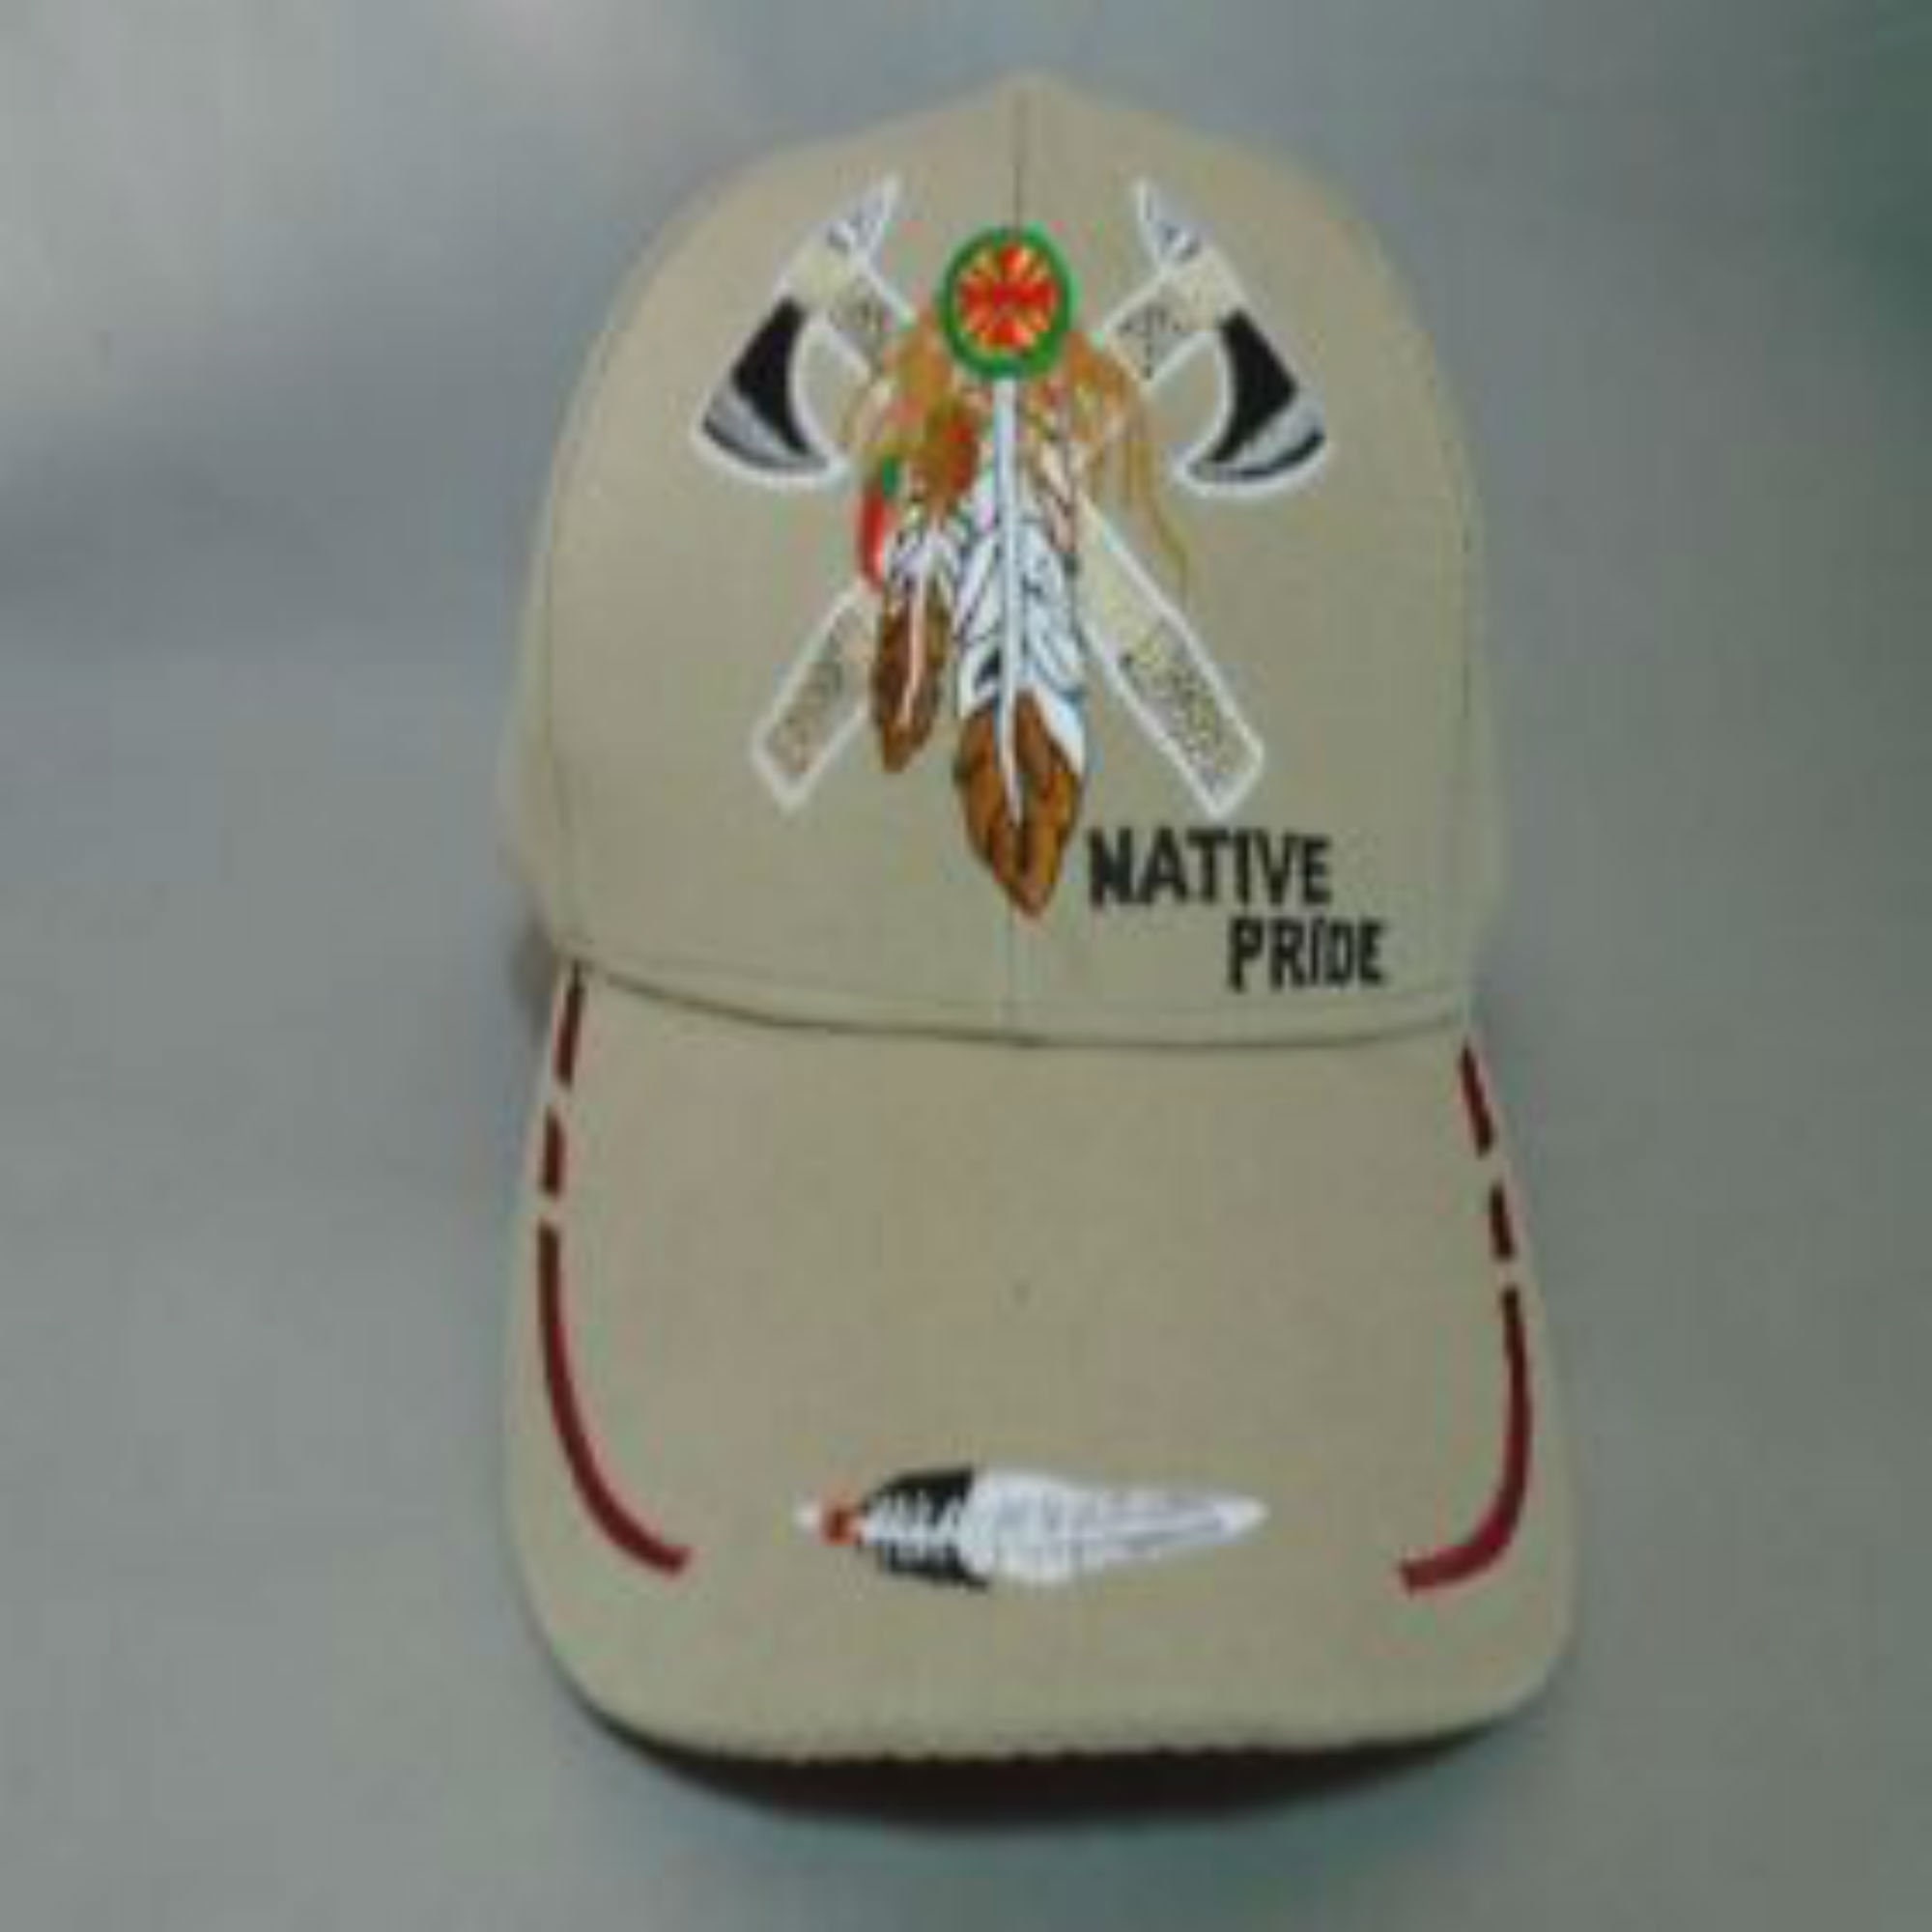 Tomahawk Native Pride Baseball Cap Embroidered Khaki Color Uni-sex Style  FREE USA Shipping Capnp556k - Etsy